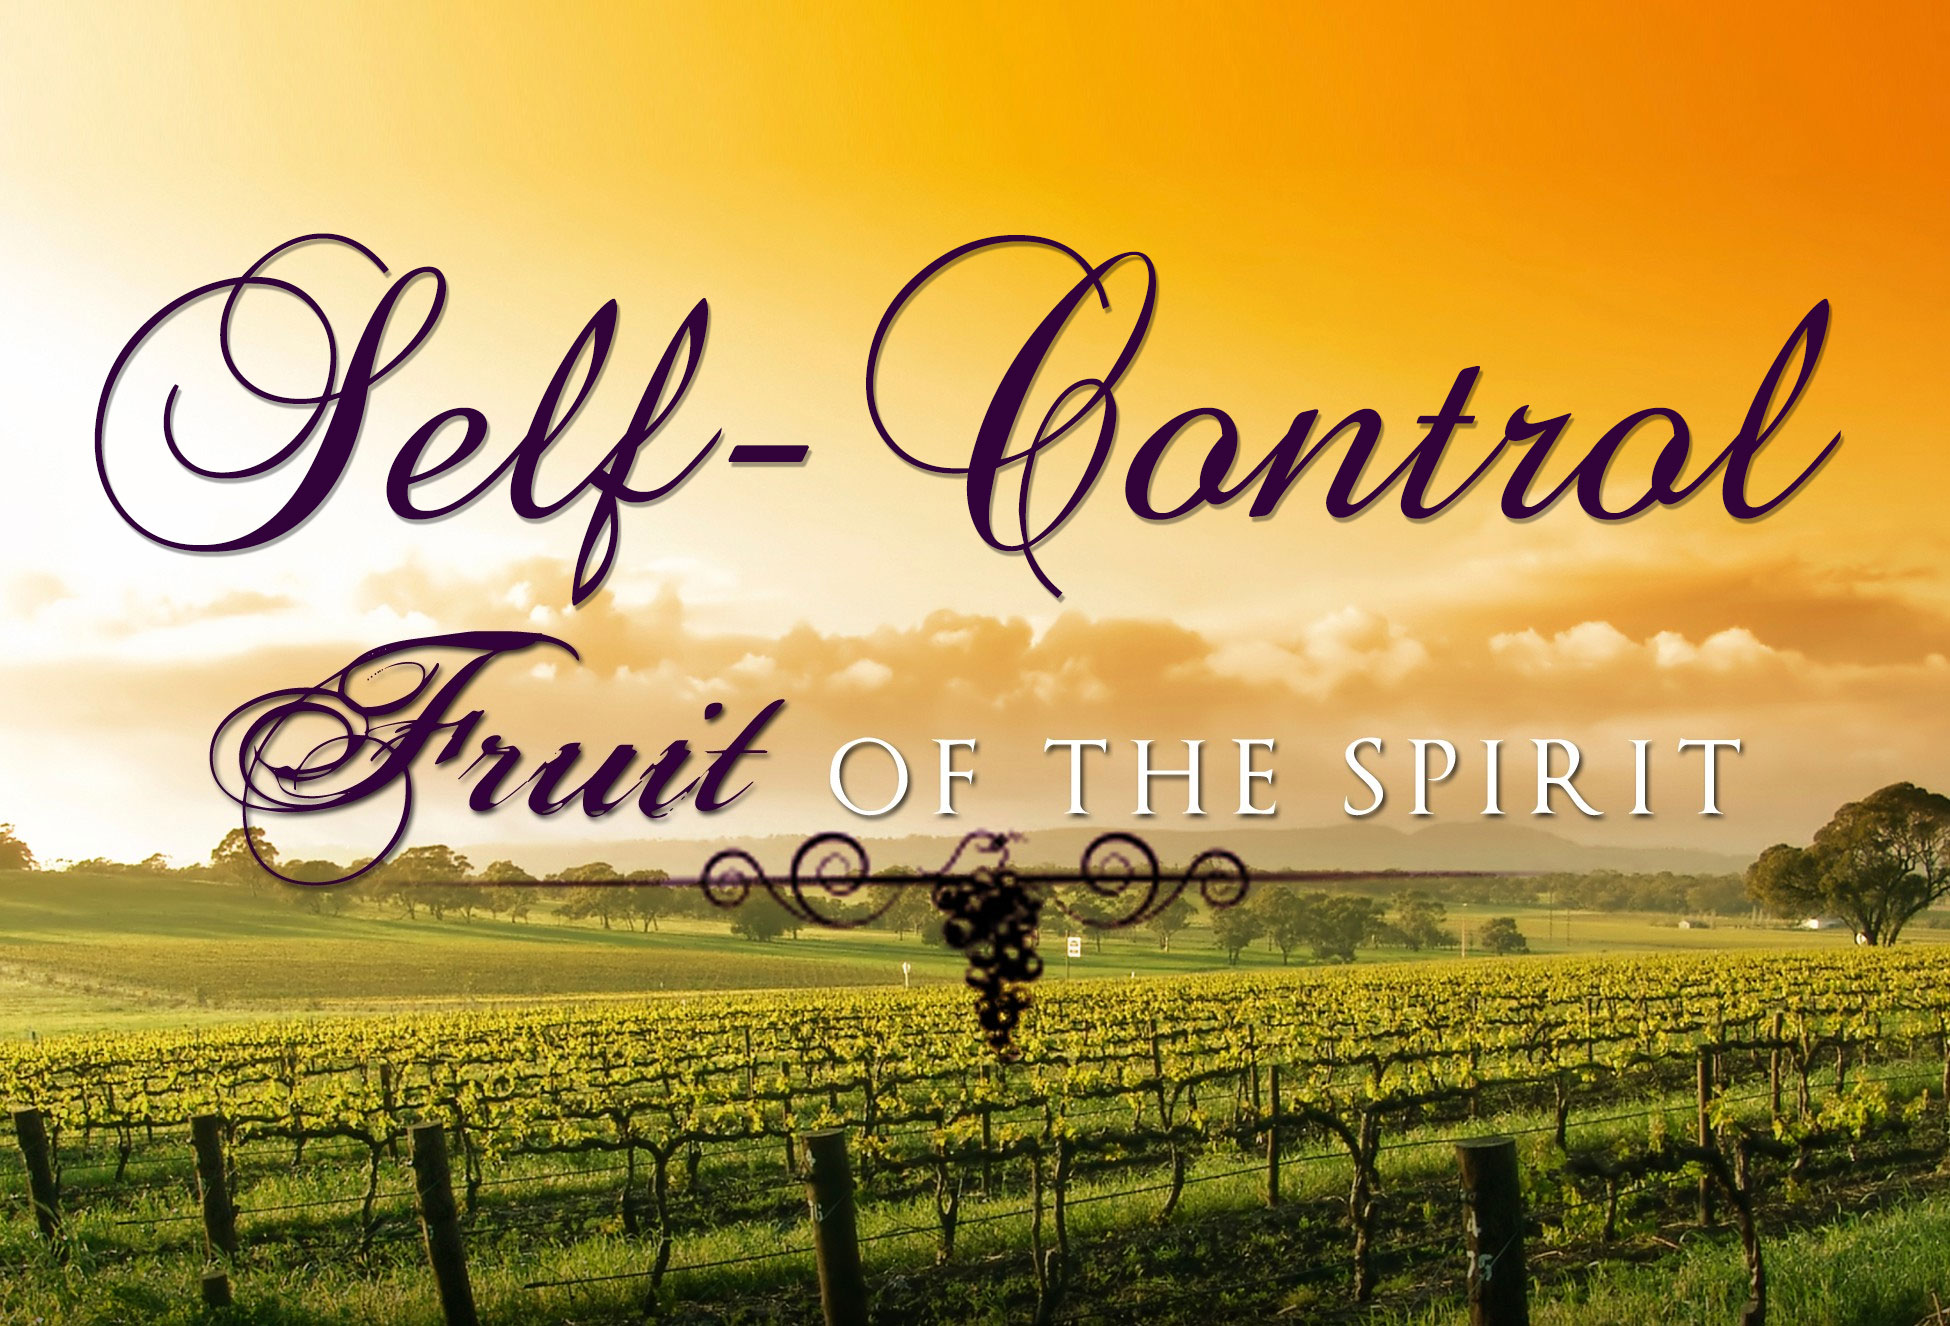 Self Control: An Invitation to Suffer